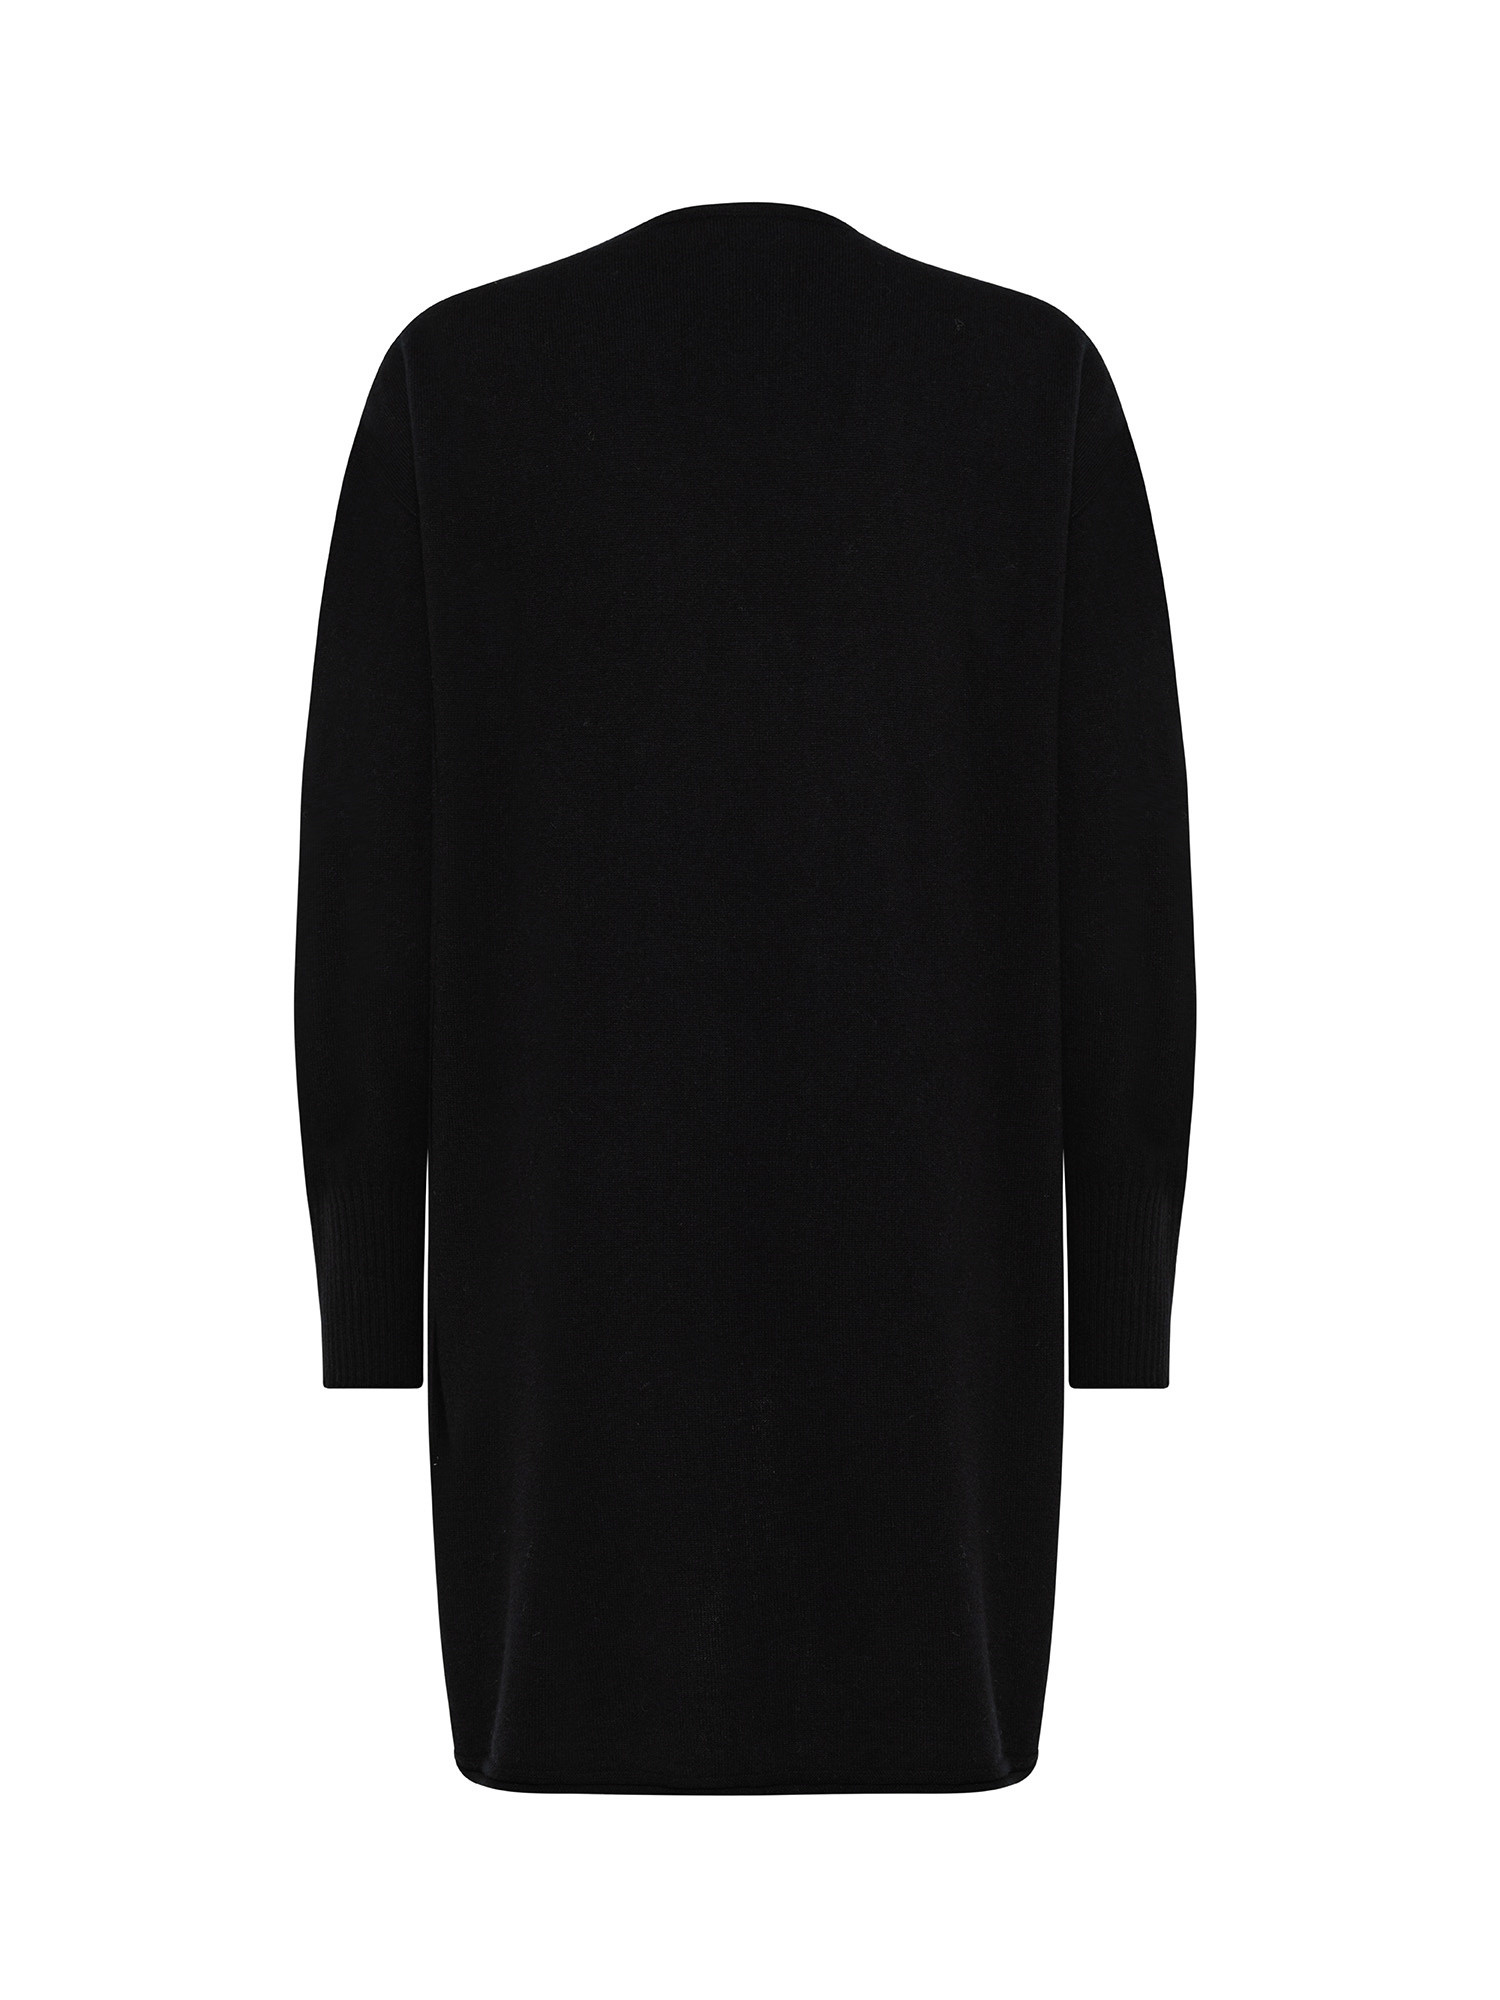 K Collection - Long cardigan, Black, large image number 1